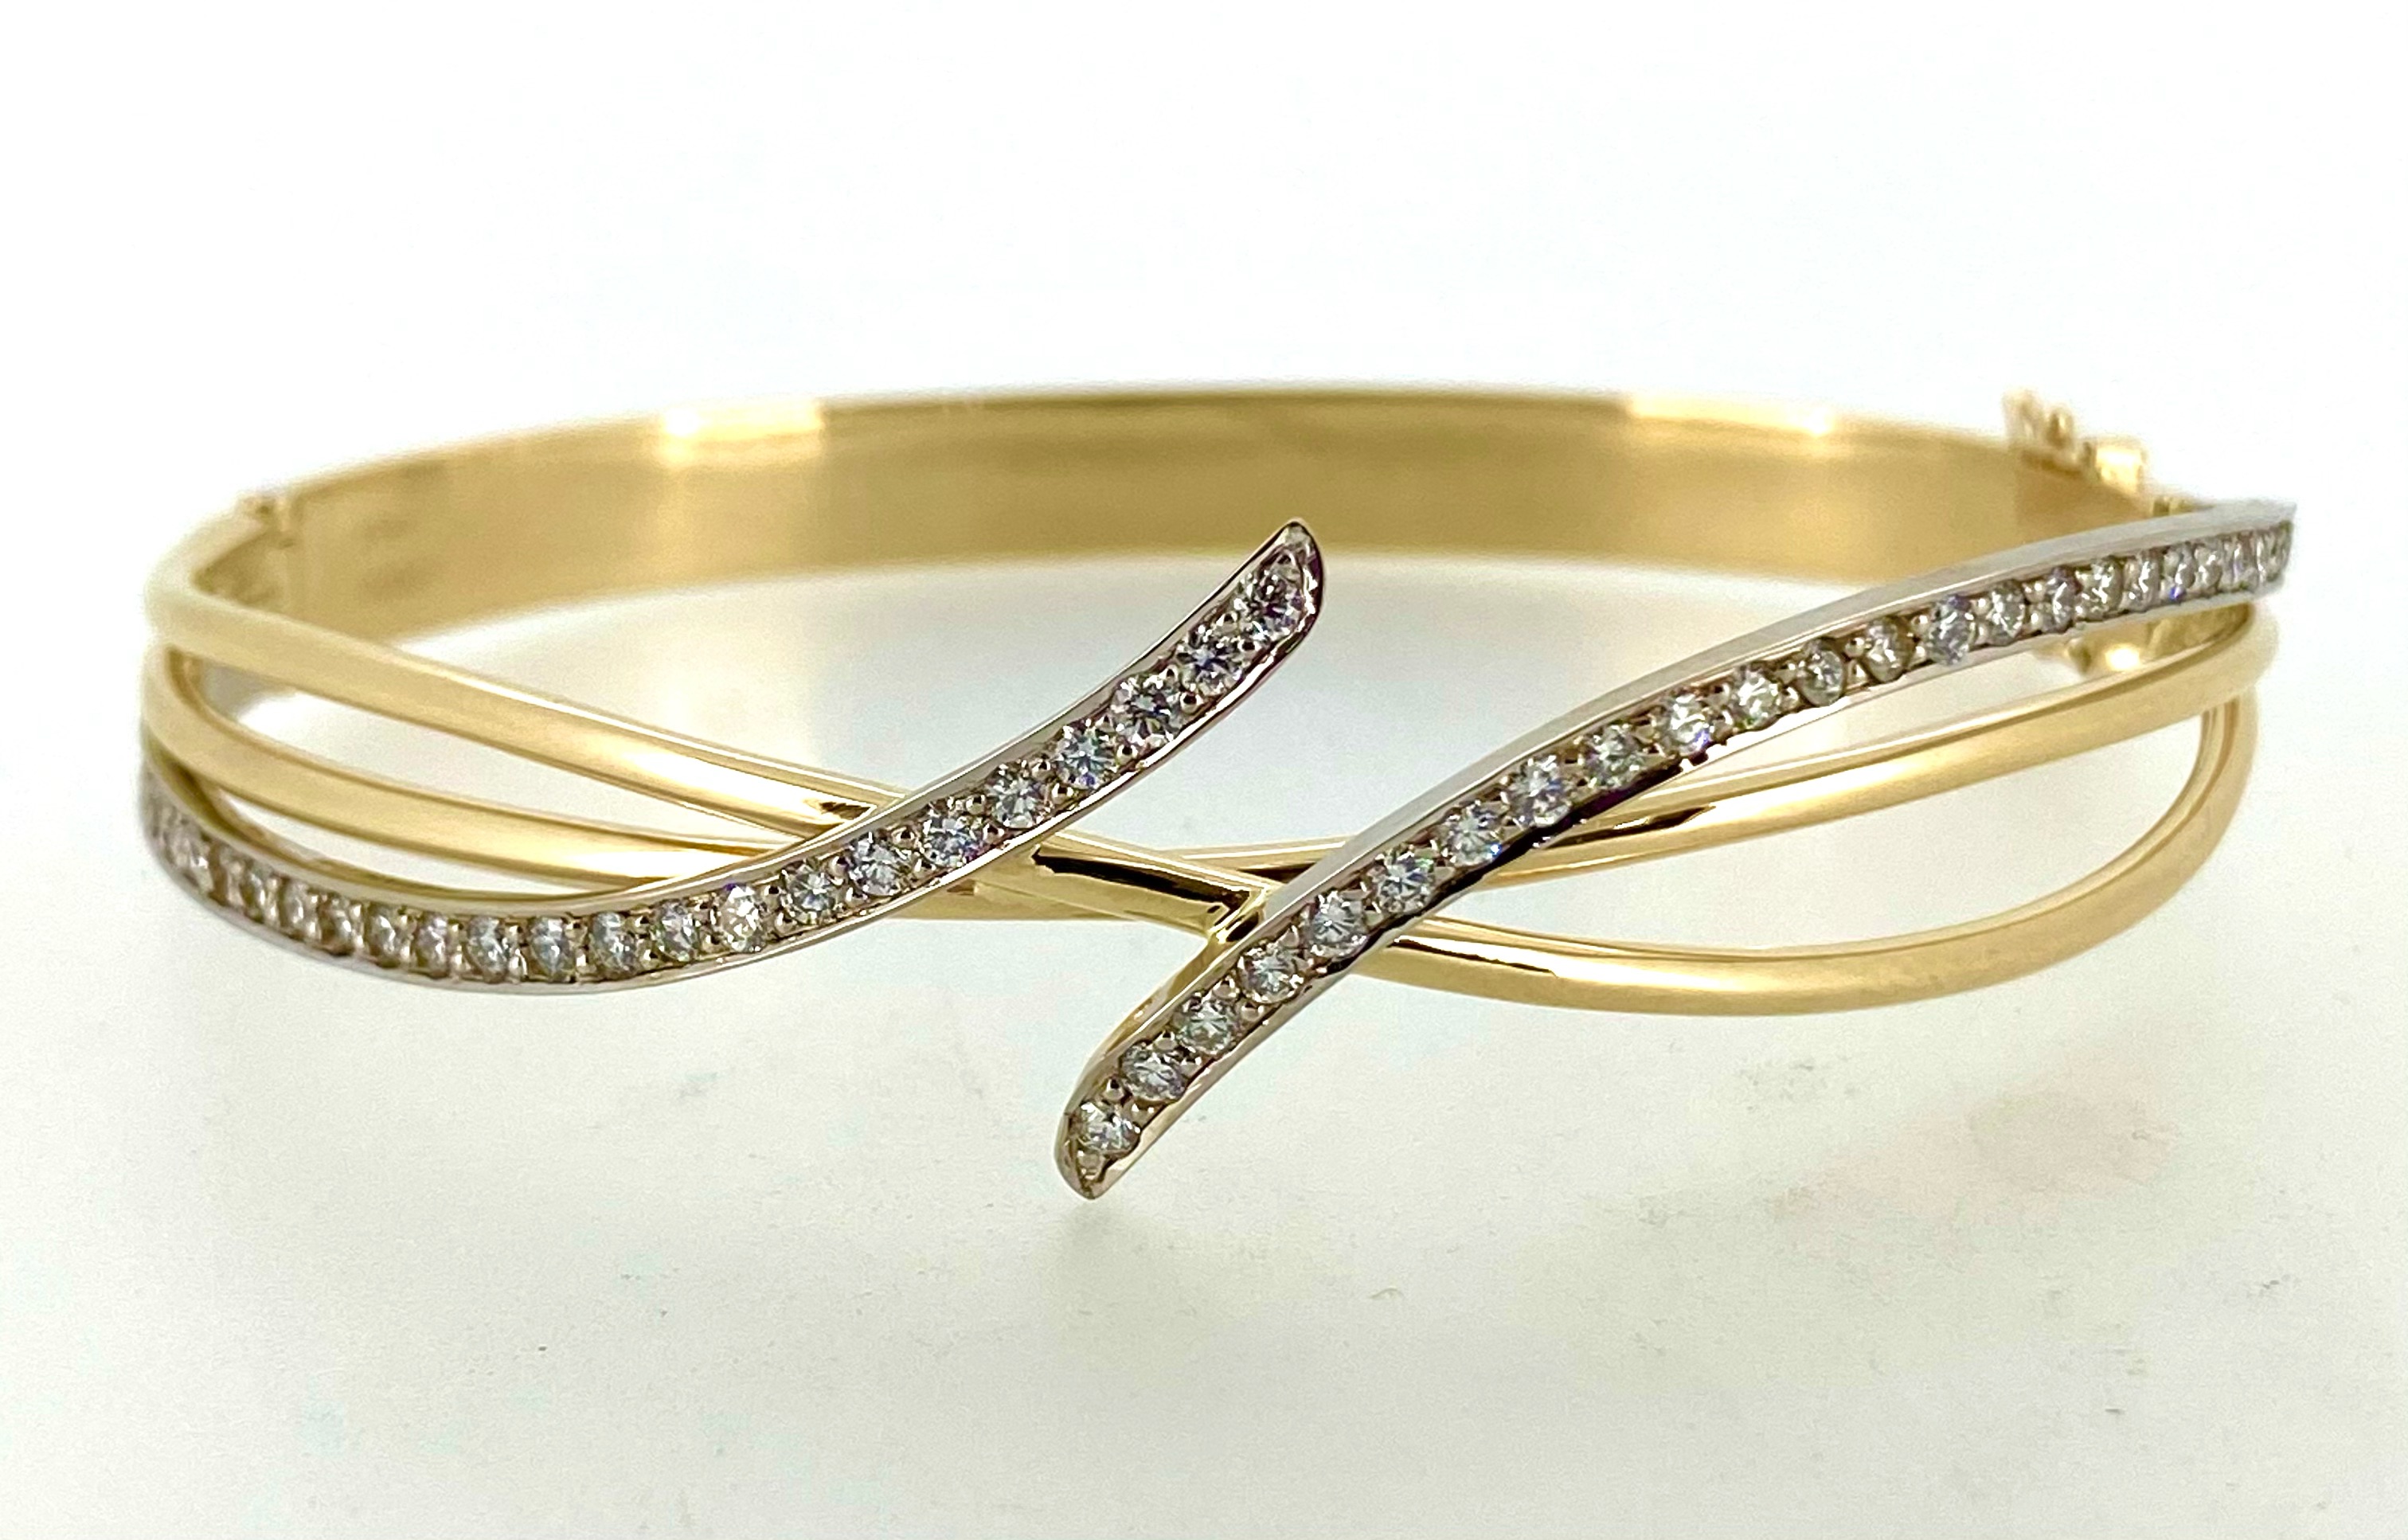 M. Grosser Jewelry Design | Custom Jewelry | Carmel IN